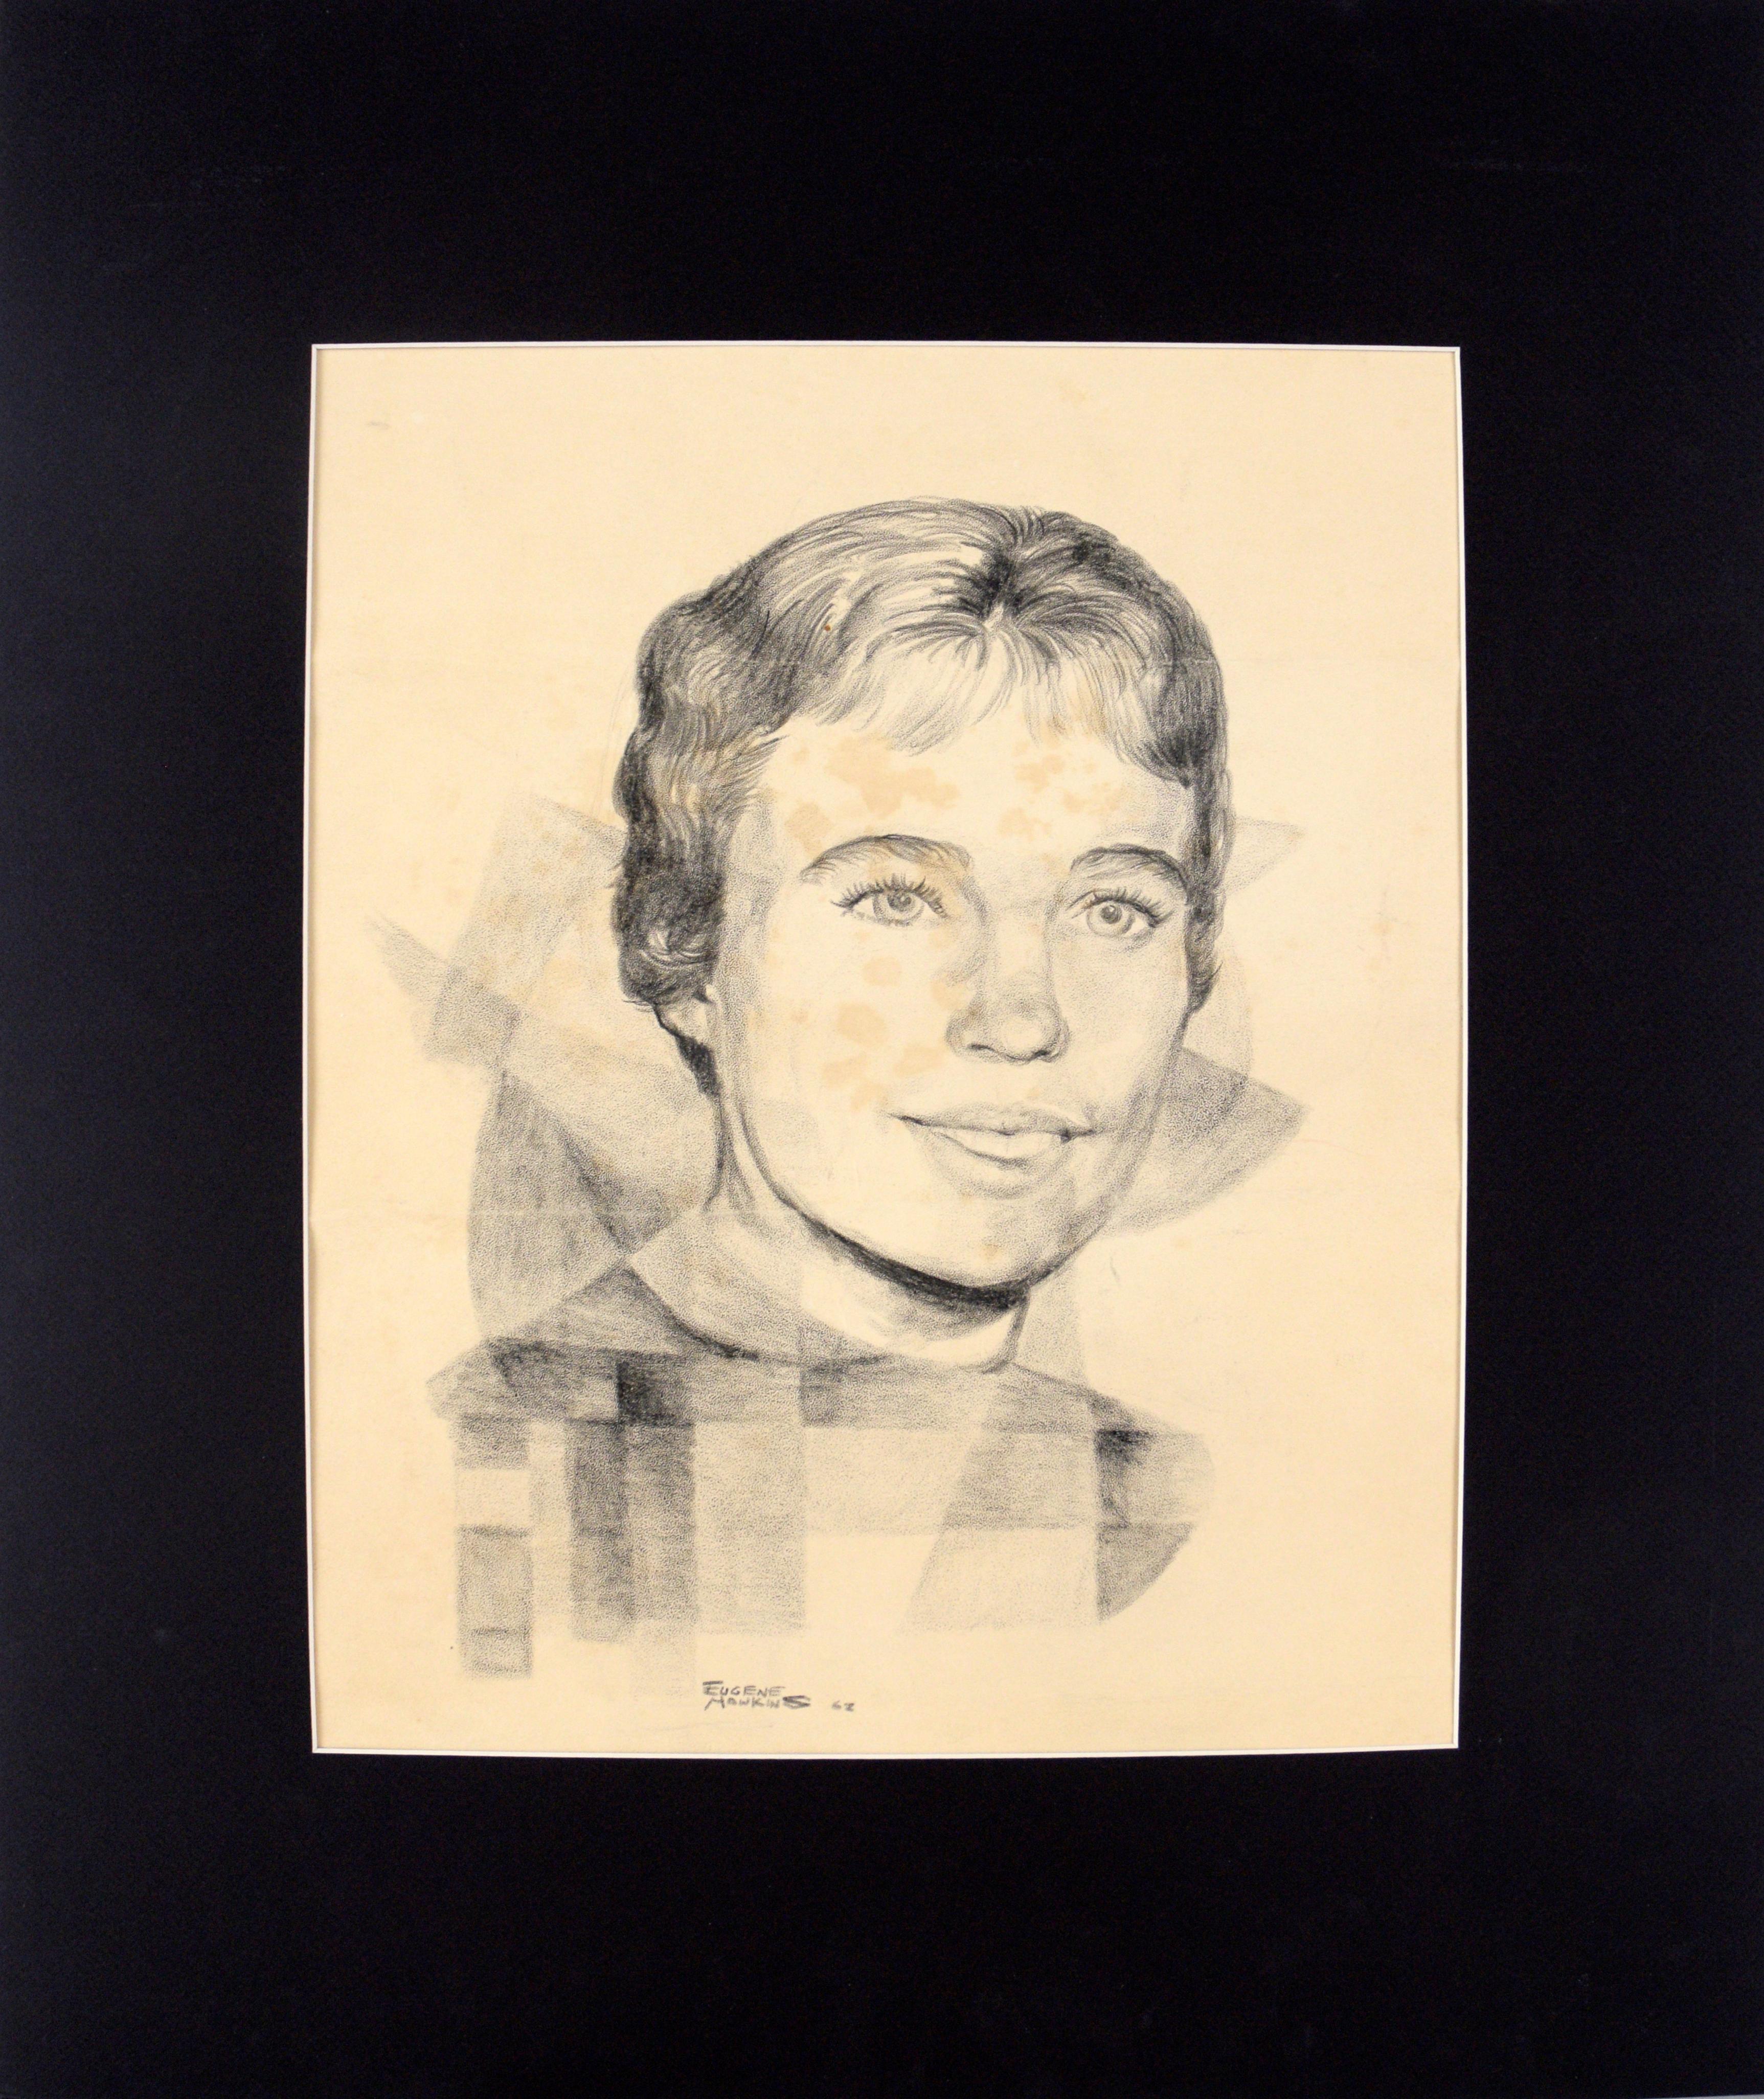 Eugene Hawkins Figurative Print - Geometric Woman's Portrait - Rare Signed Graphite Drawing on Paper 1962